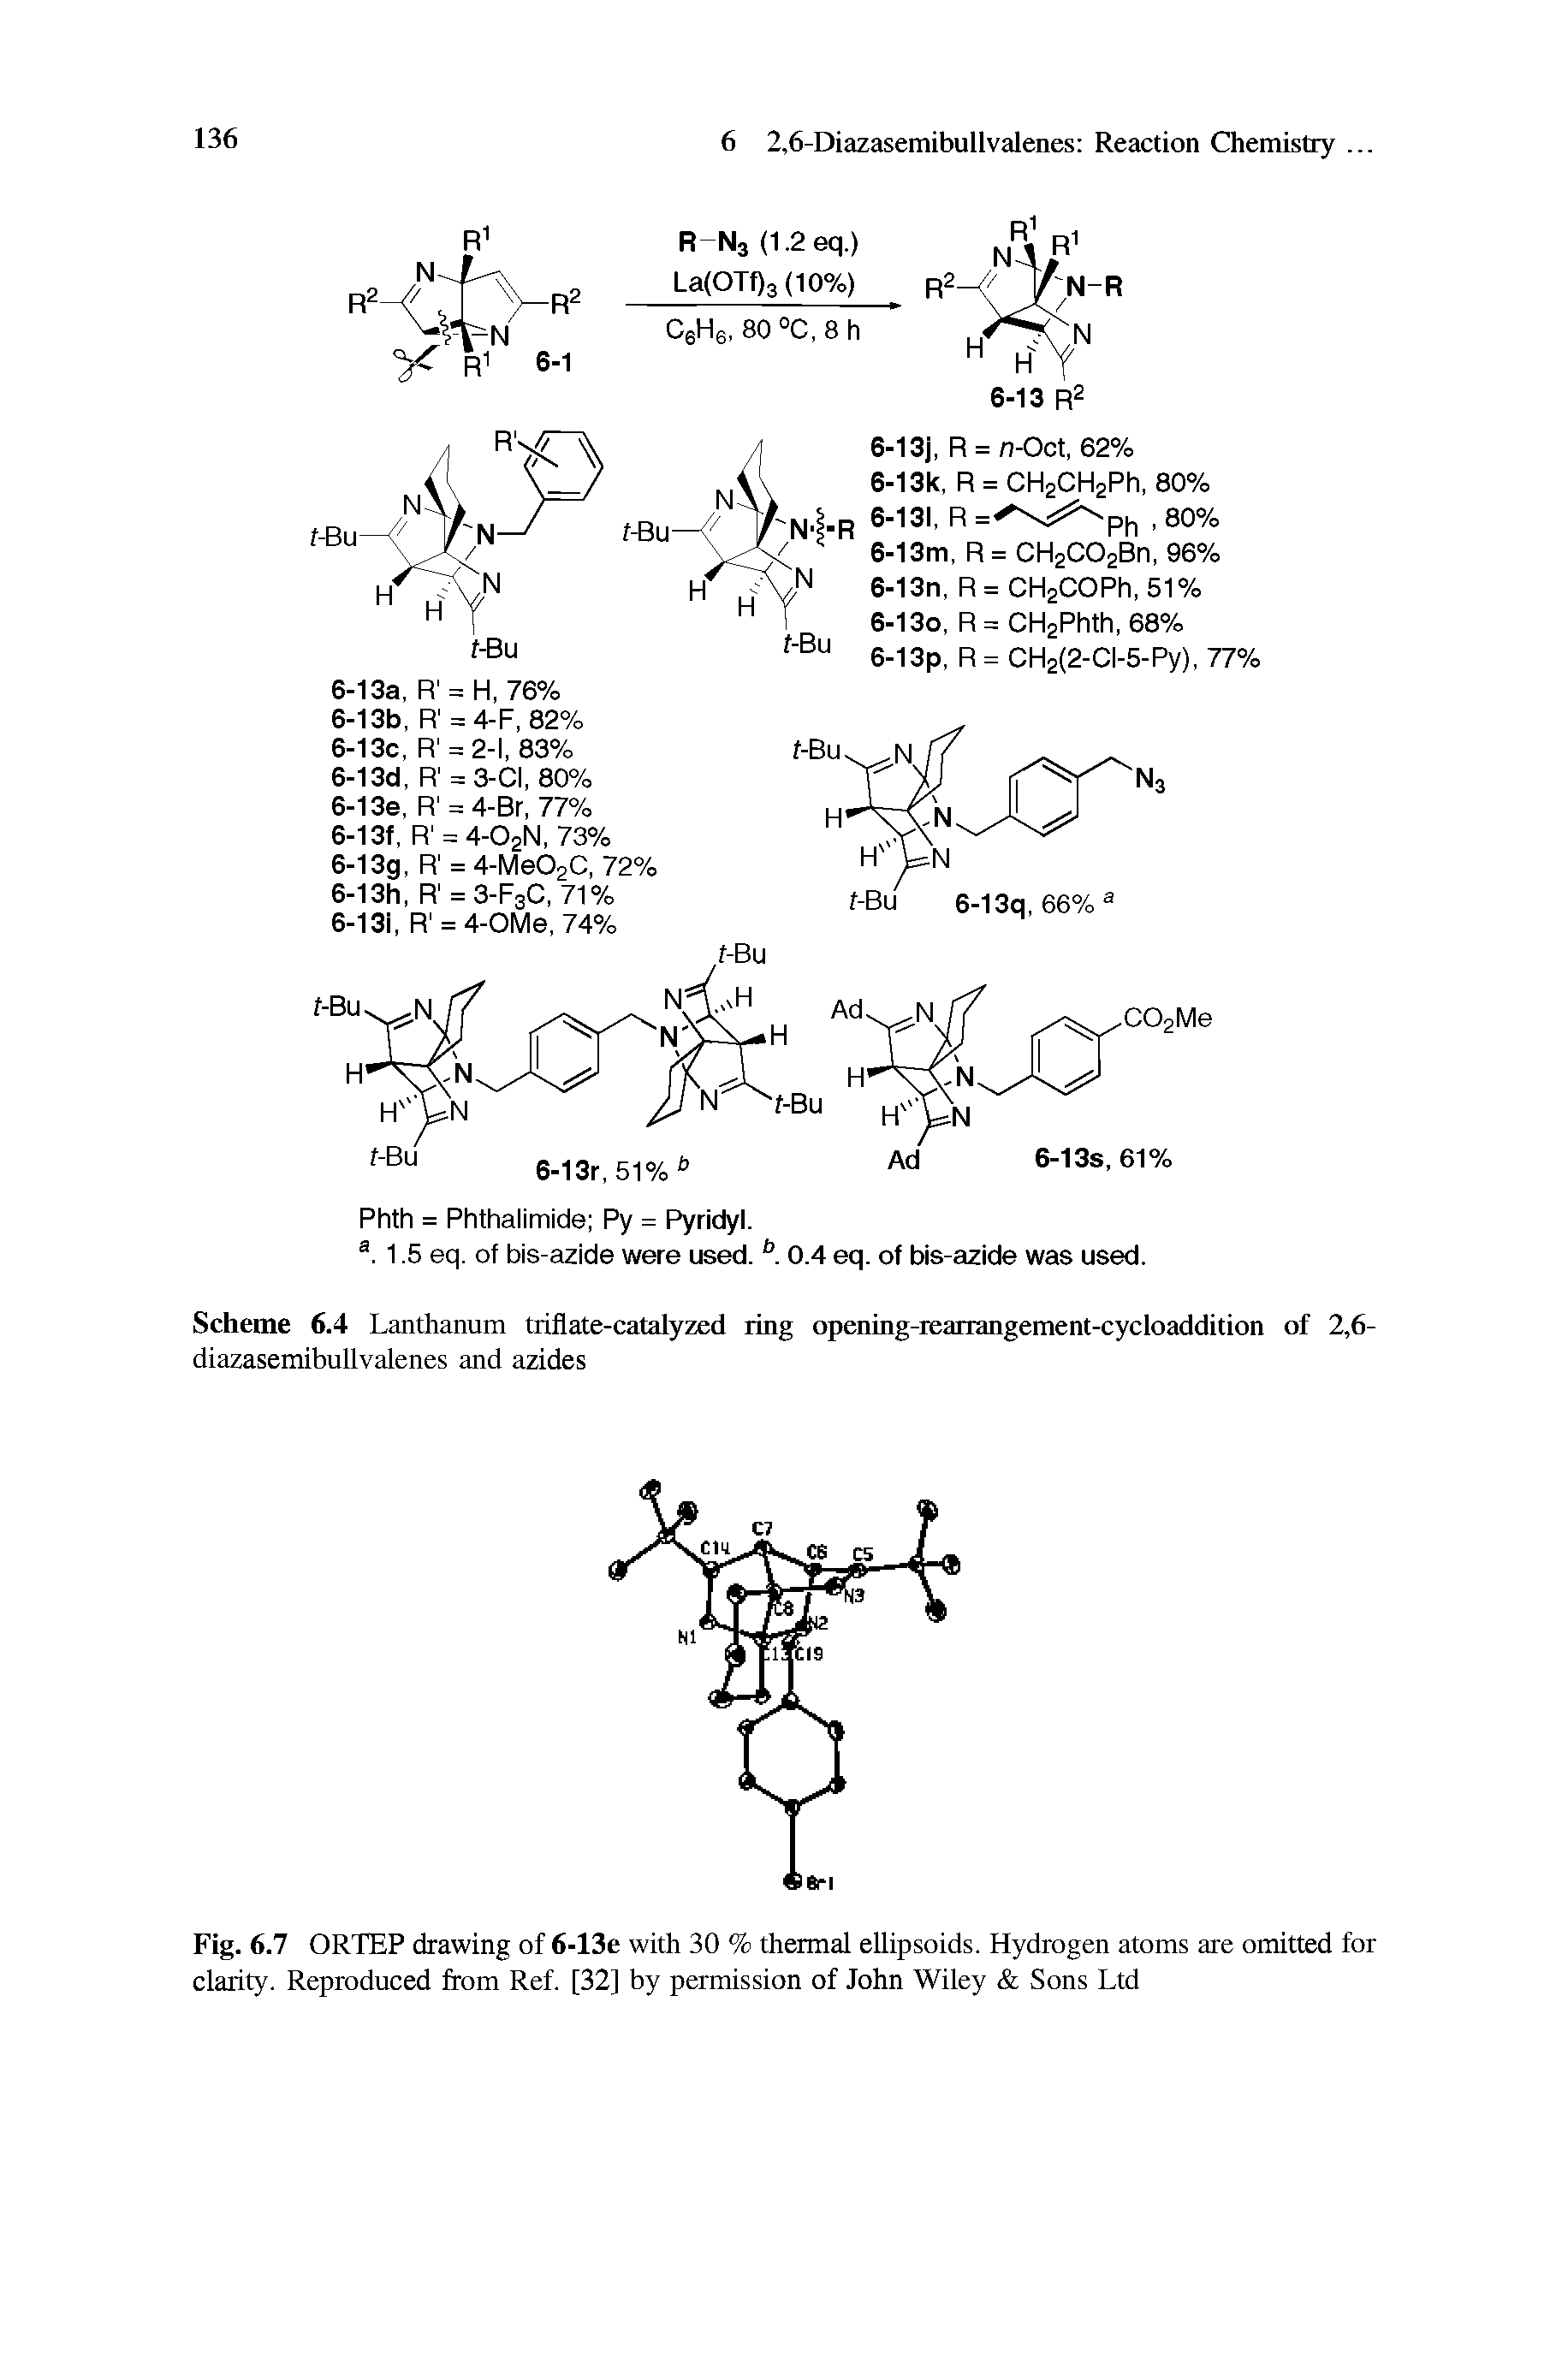 Scheme 6.4 Lanthanum triflate-catalyzed ring opening-rearrangement-cycloaddition of 2,6-diazasemibullvalenes and azides...